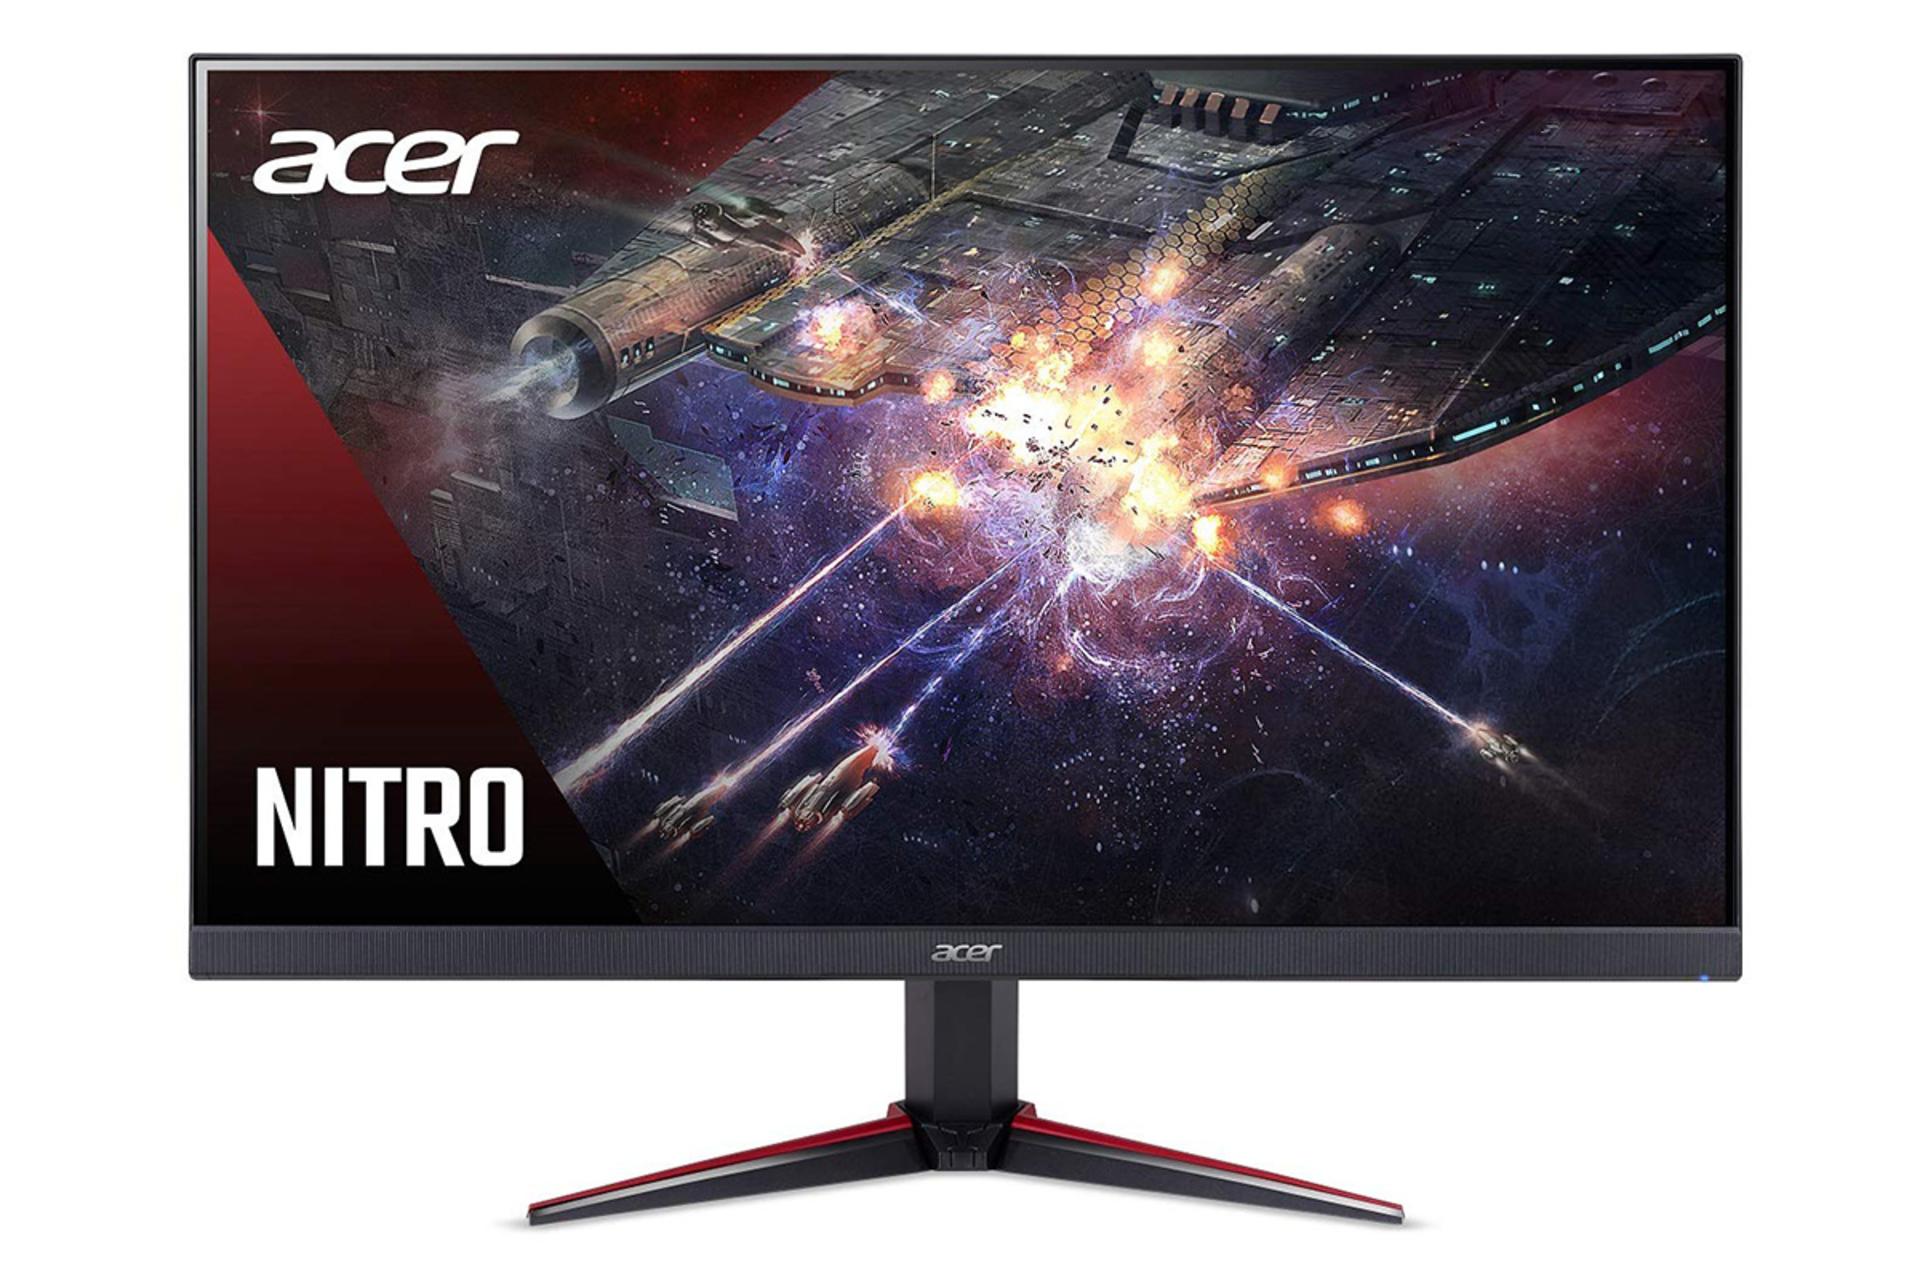 Acer Nitro VG270 S / ایسر نیترو